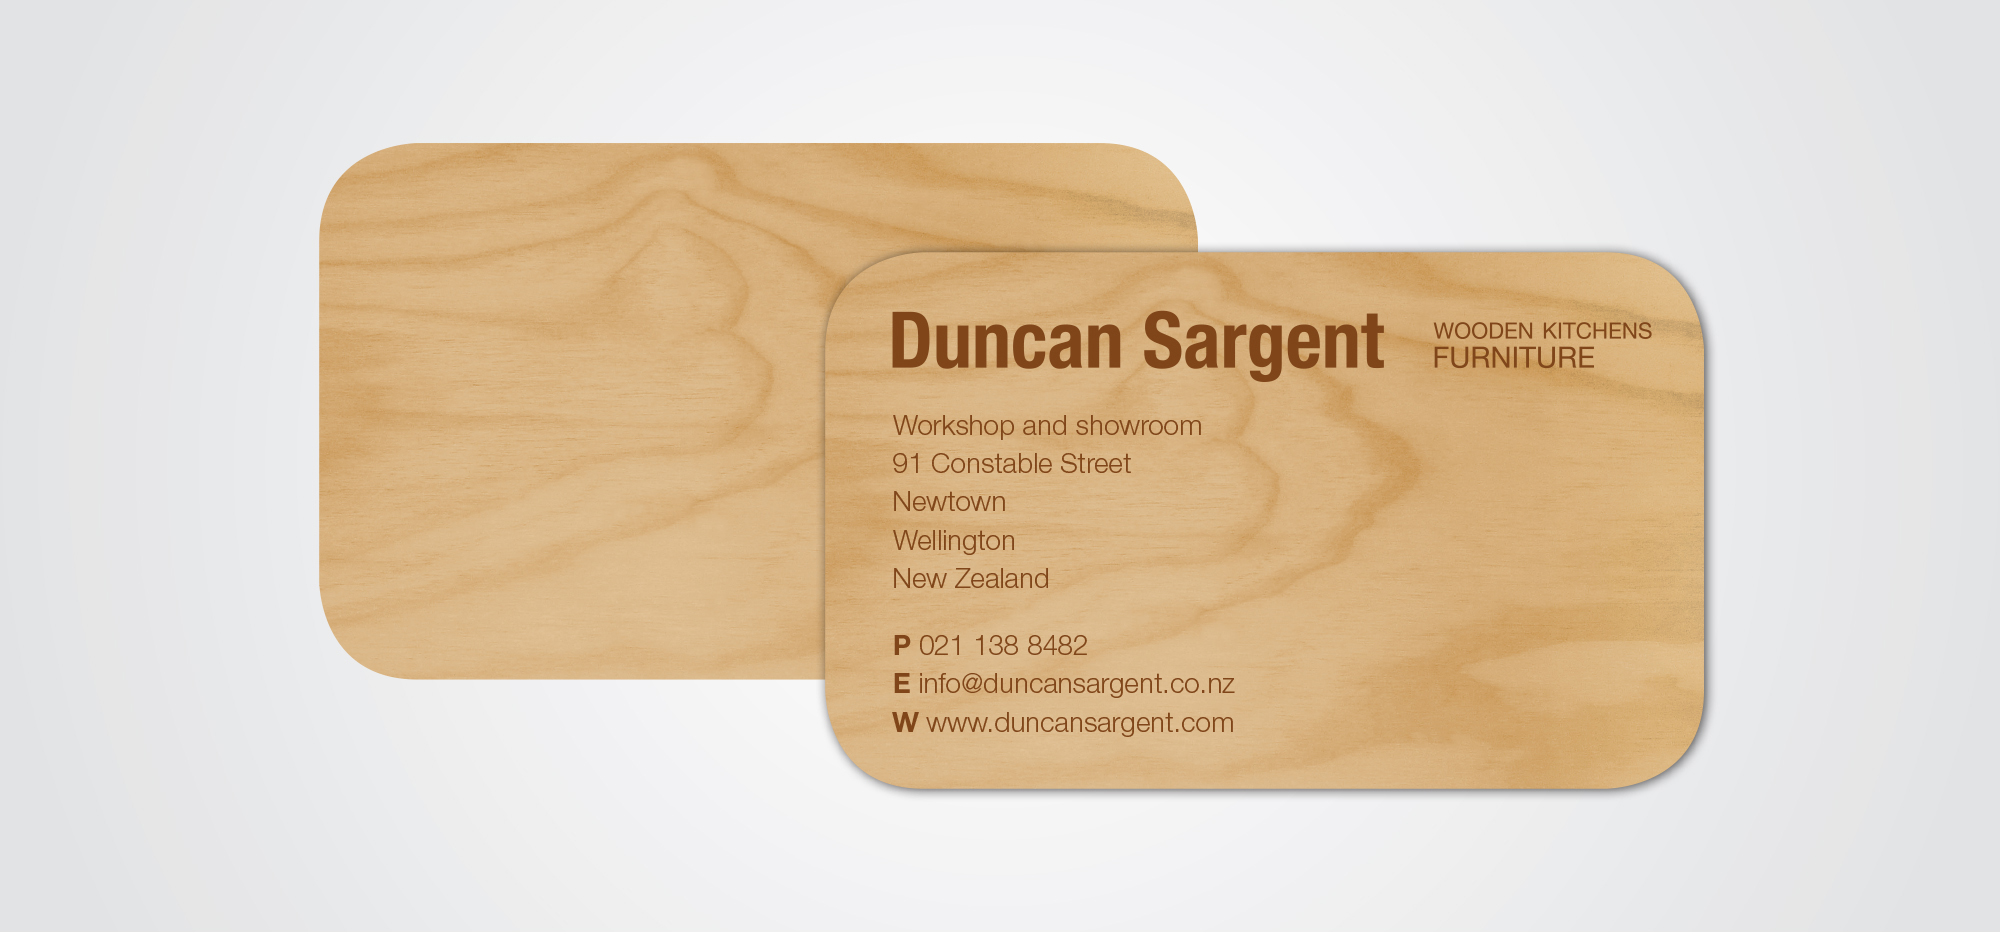 Duncan Sargent